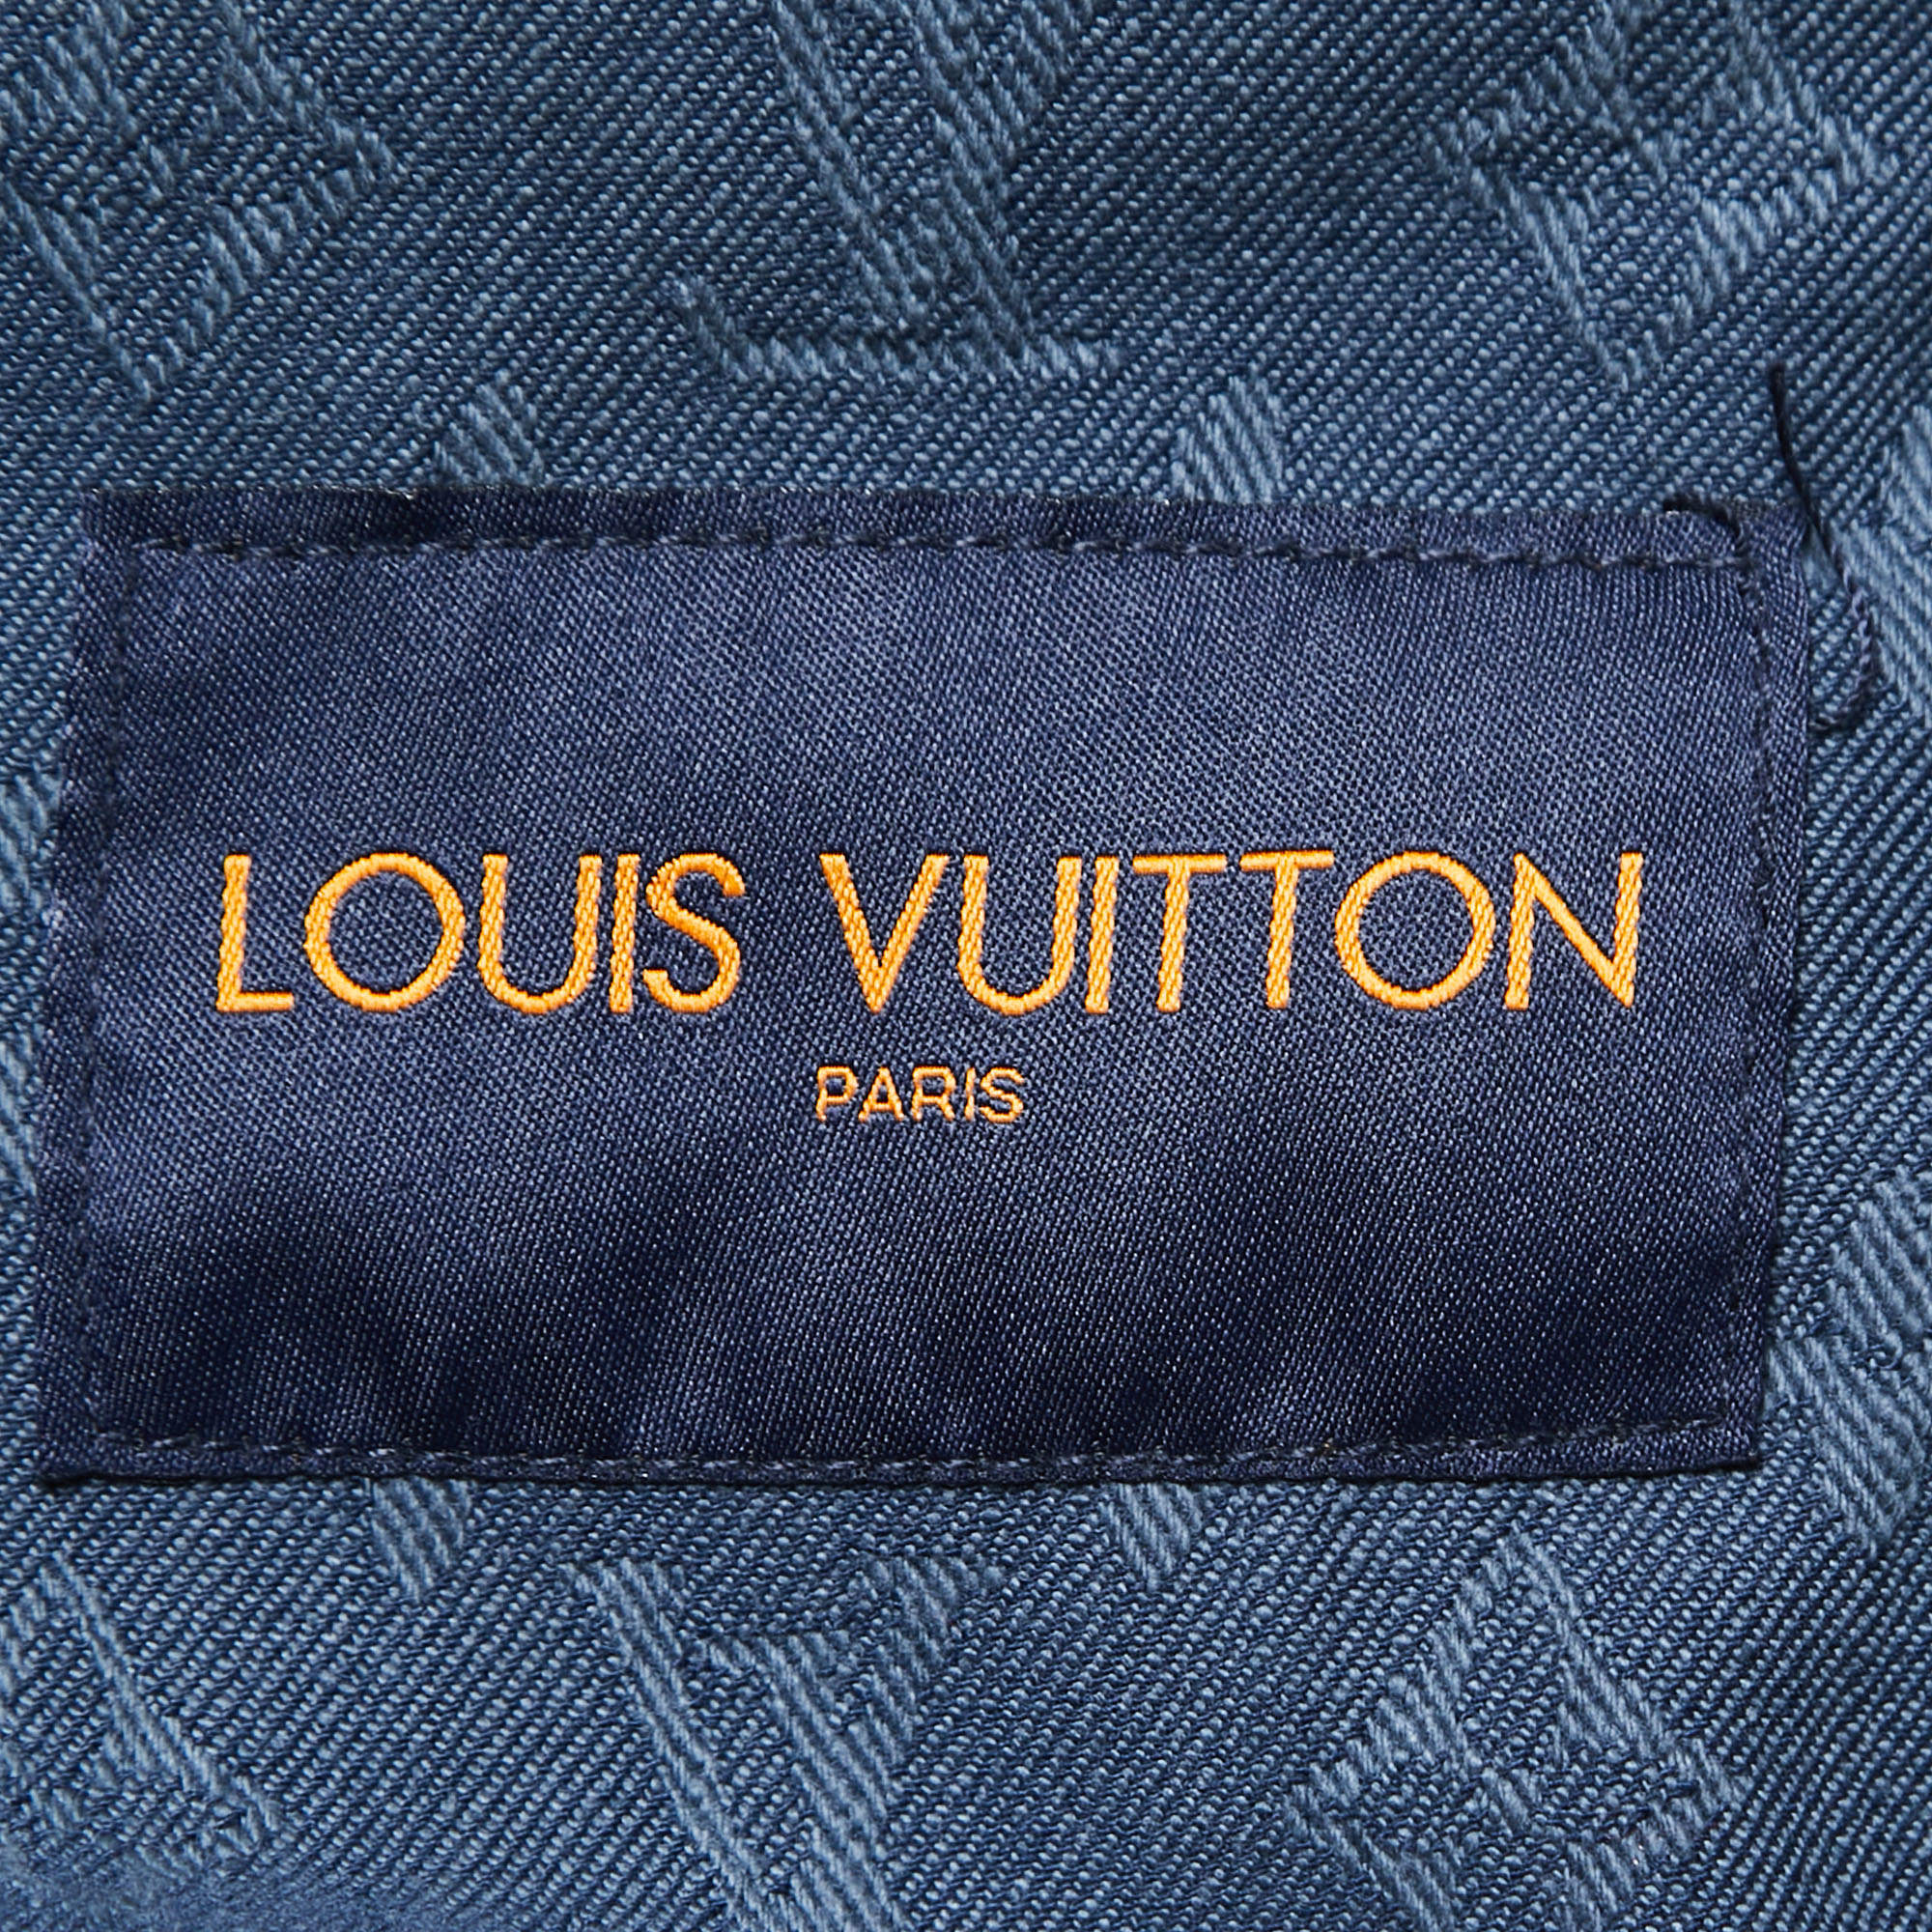 Louis Vuitton Drop Needle Monogram Bomber - ShopStyle Outerwear